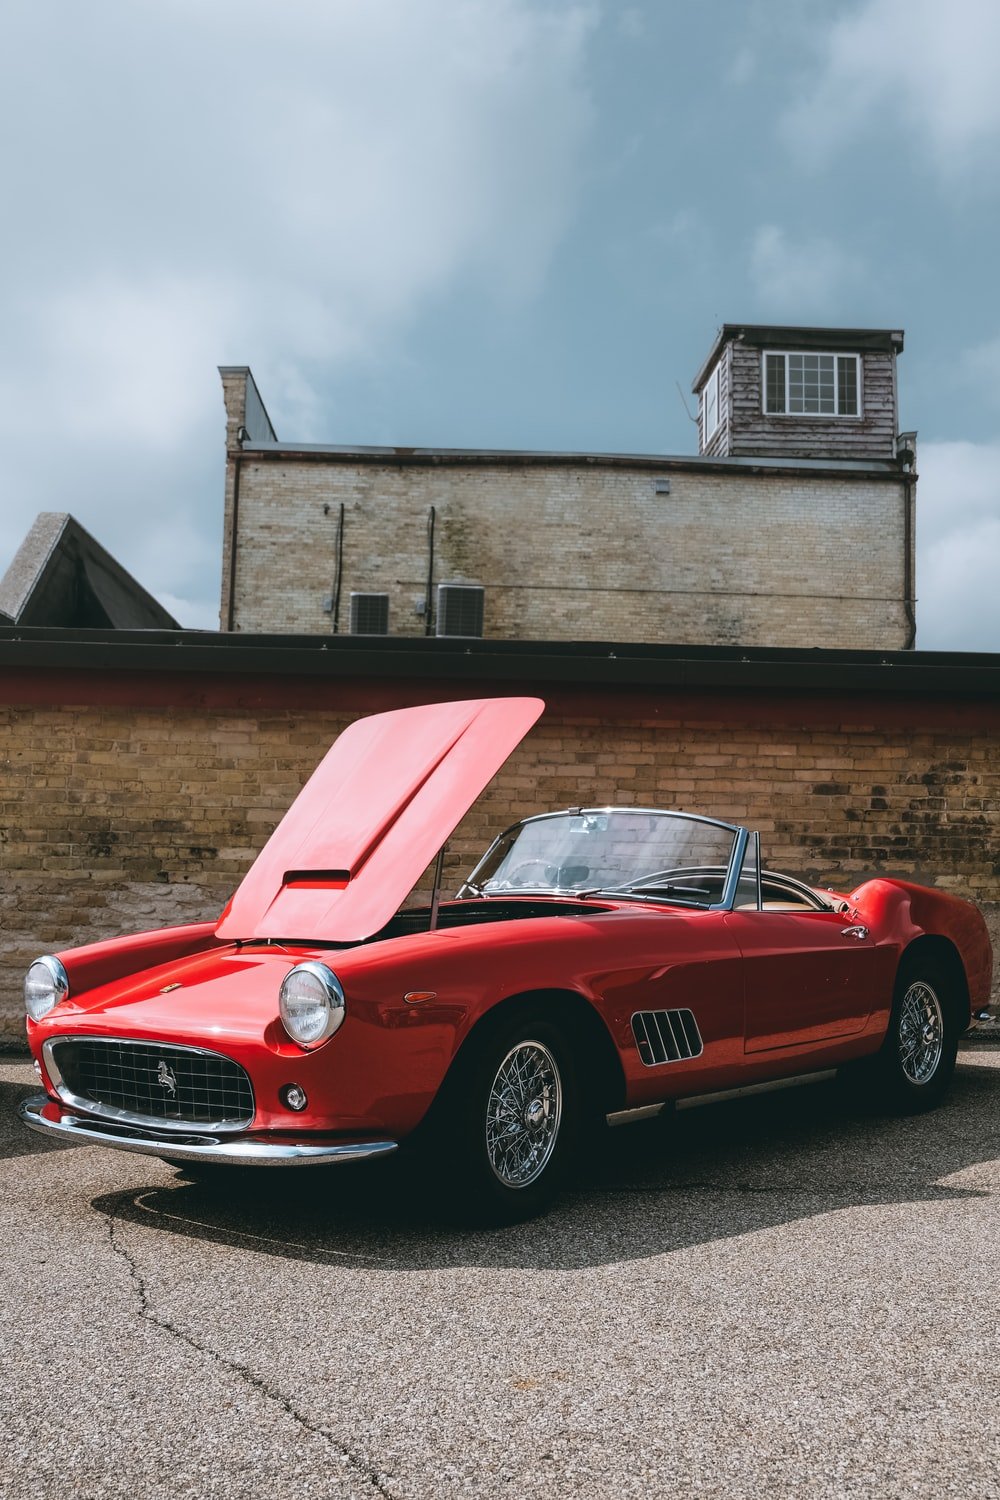 Classic Ferrari Picture. Download Free Image